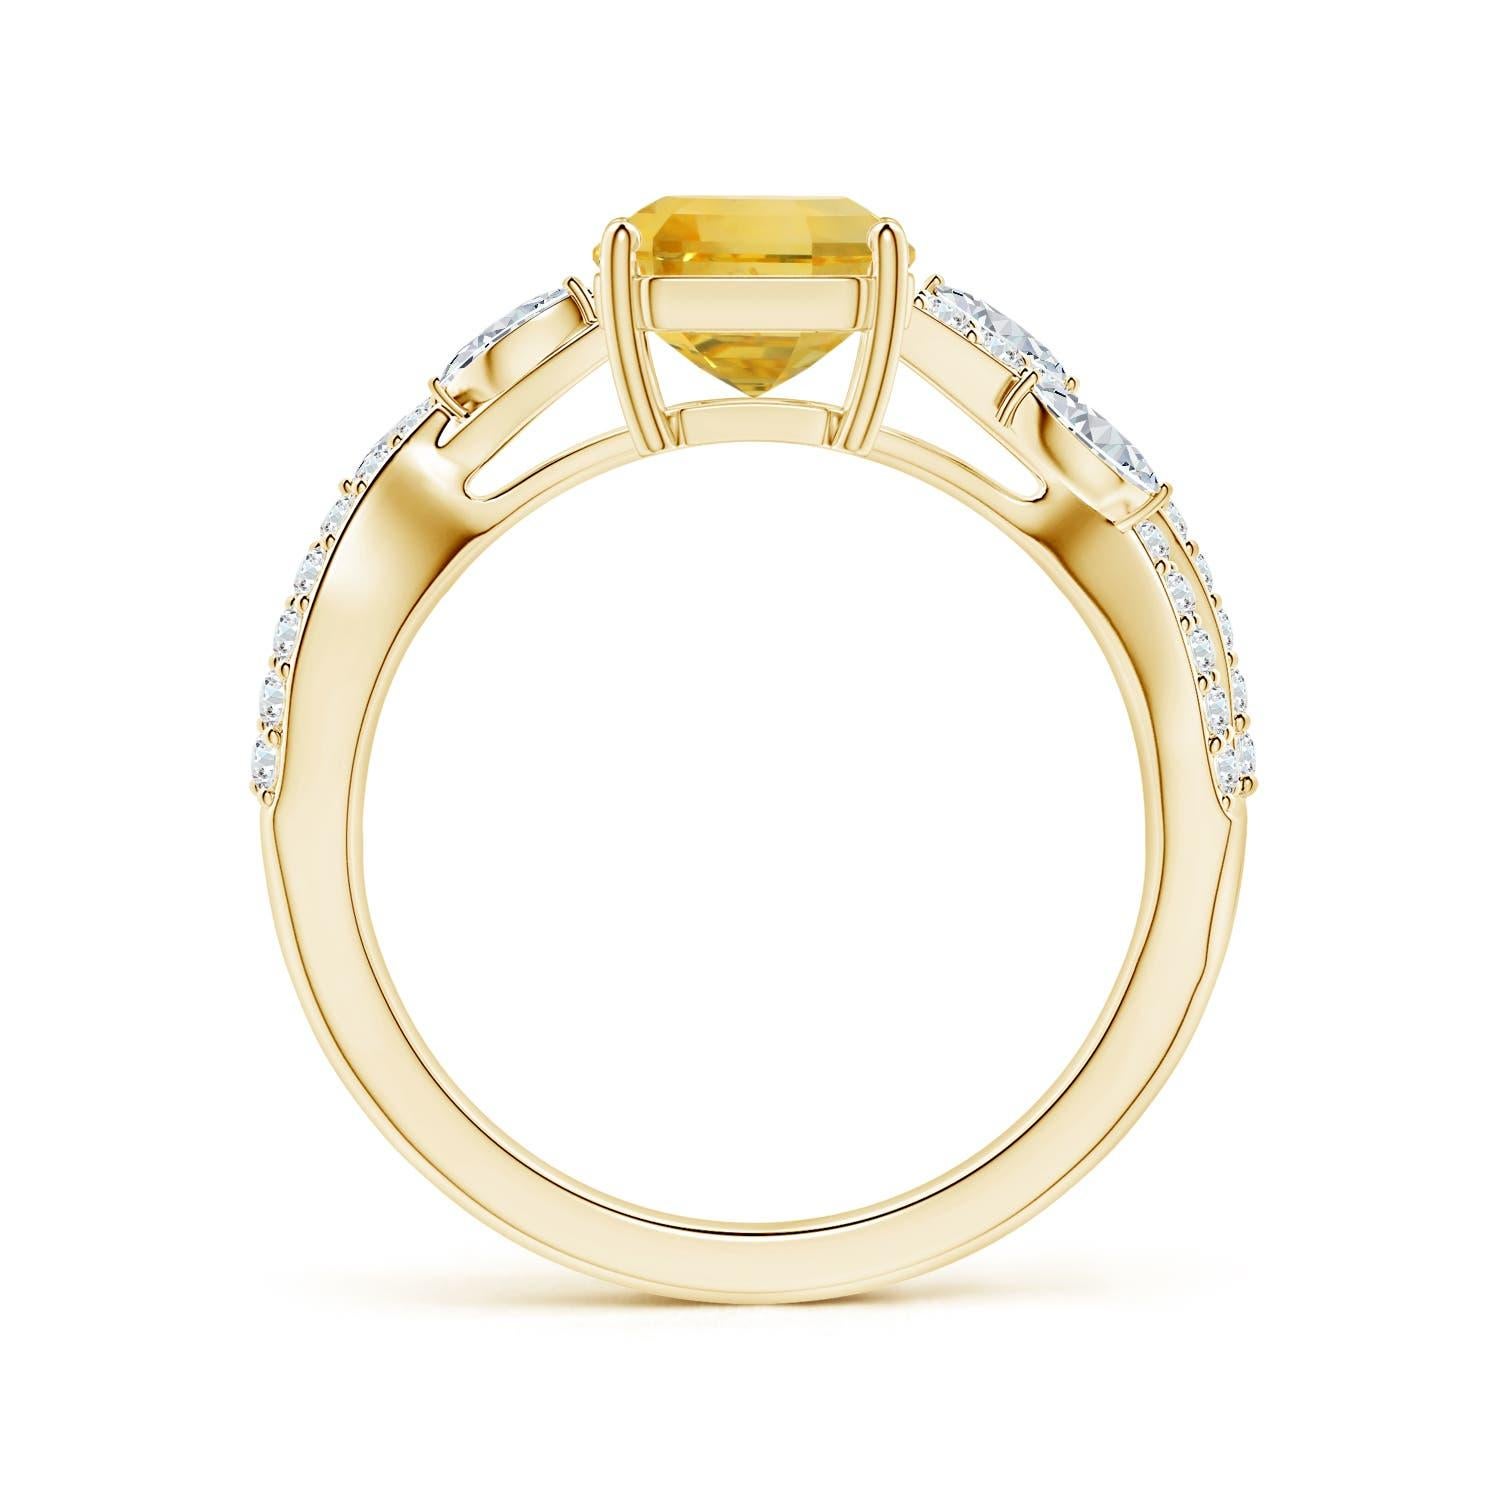 For Sale:  Angara Gia Certified Emerald-Cut Yellow Sapphire Diamond Ring in Yellow Gold 2